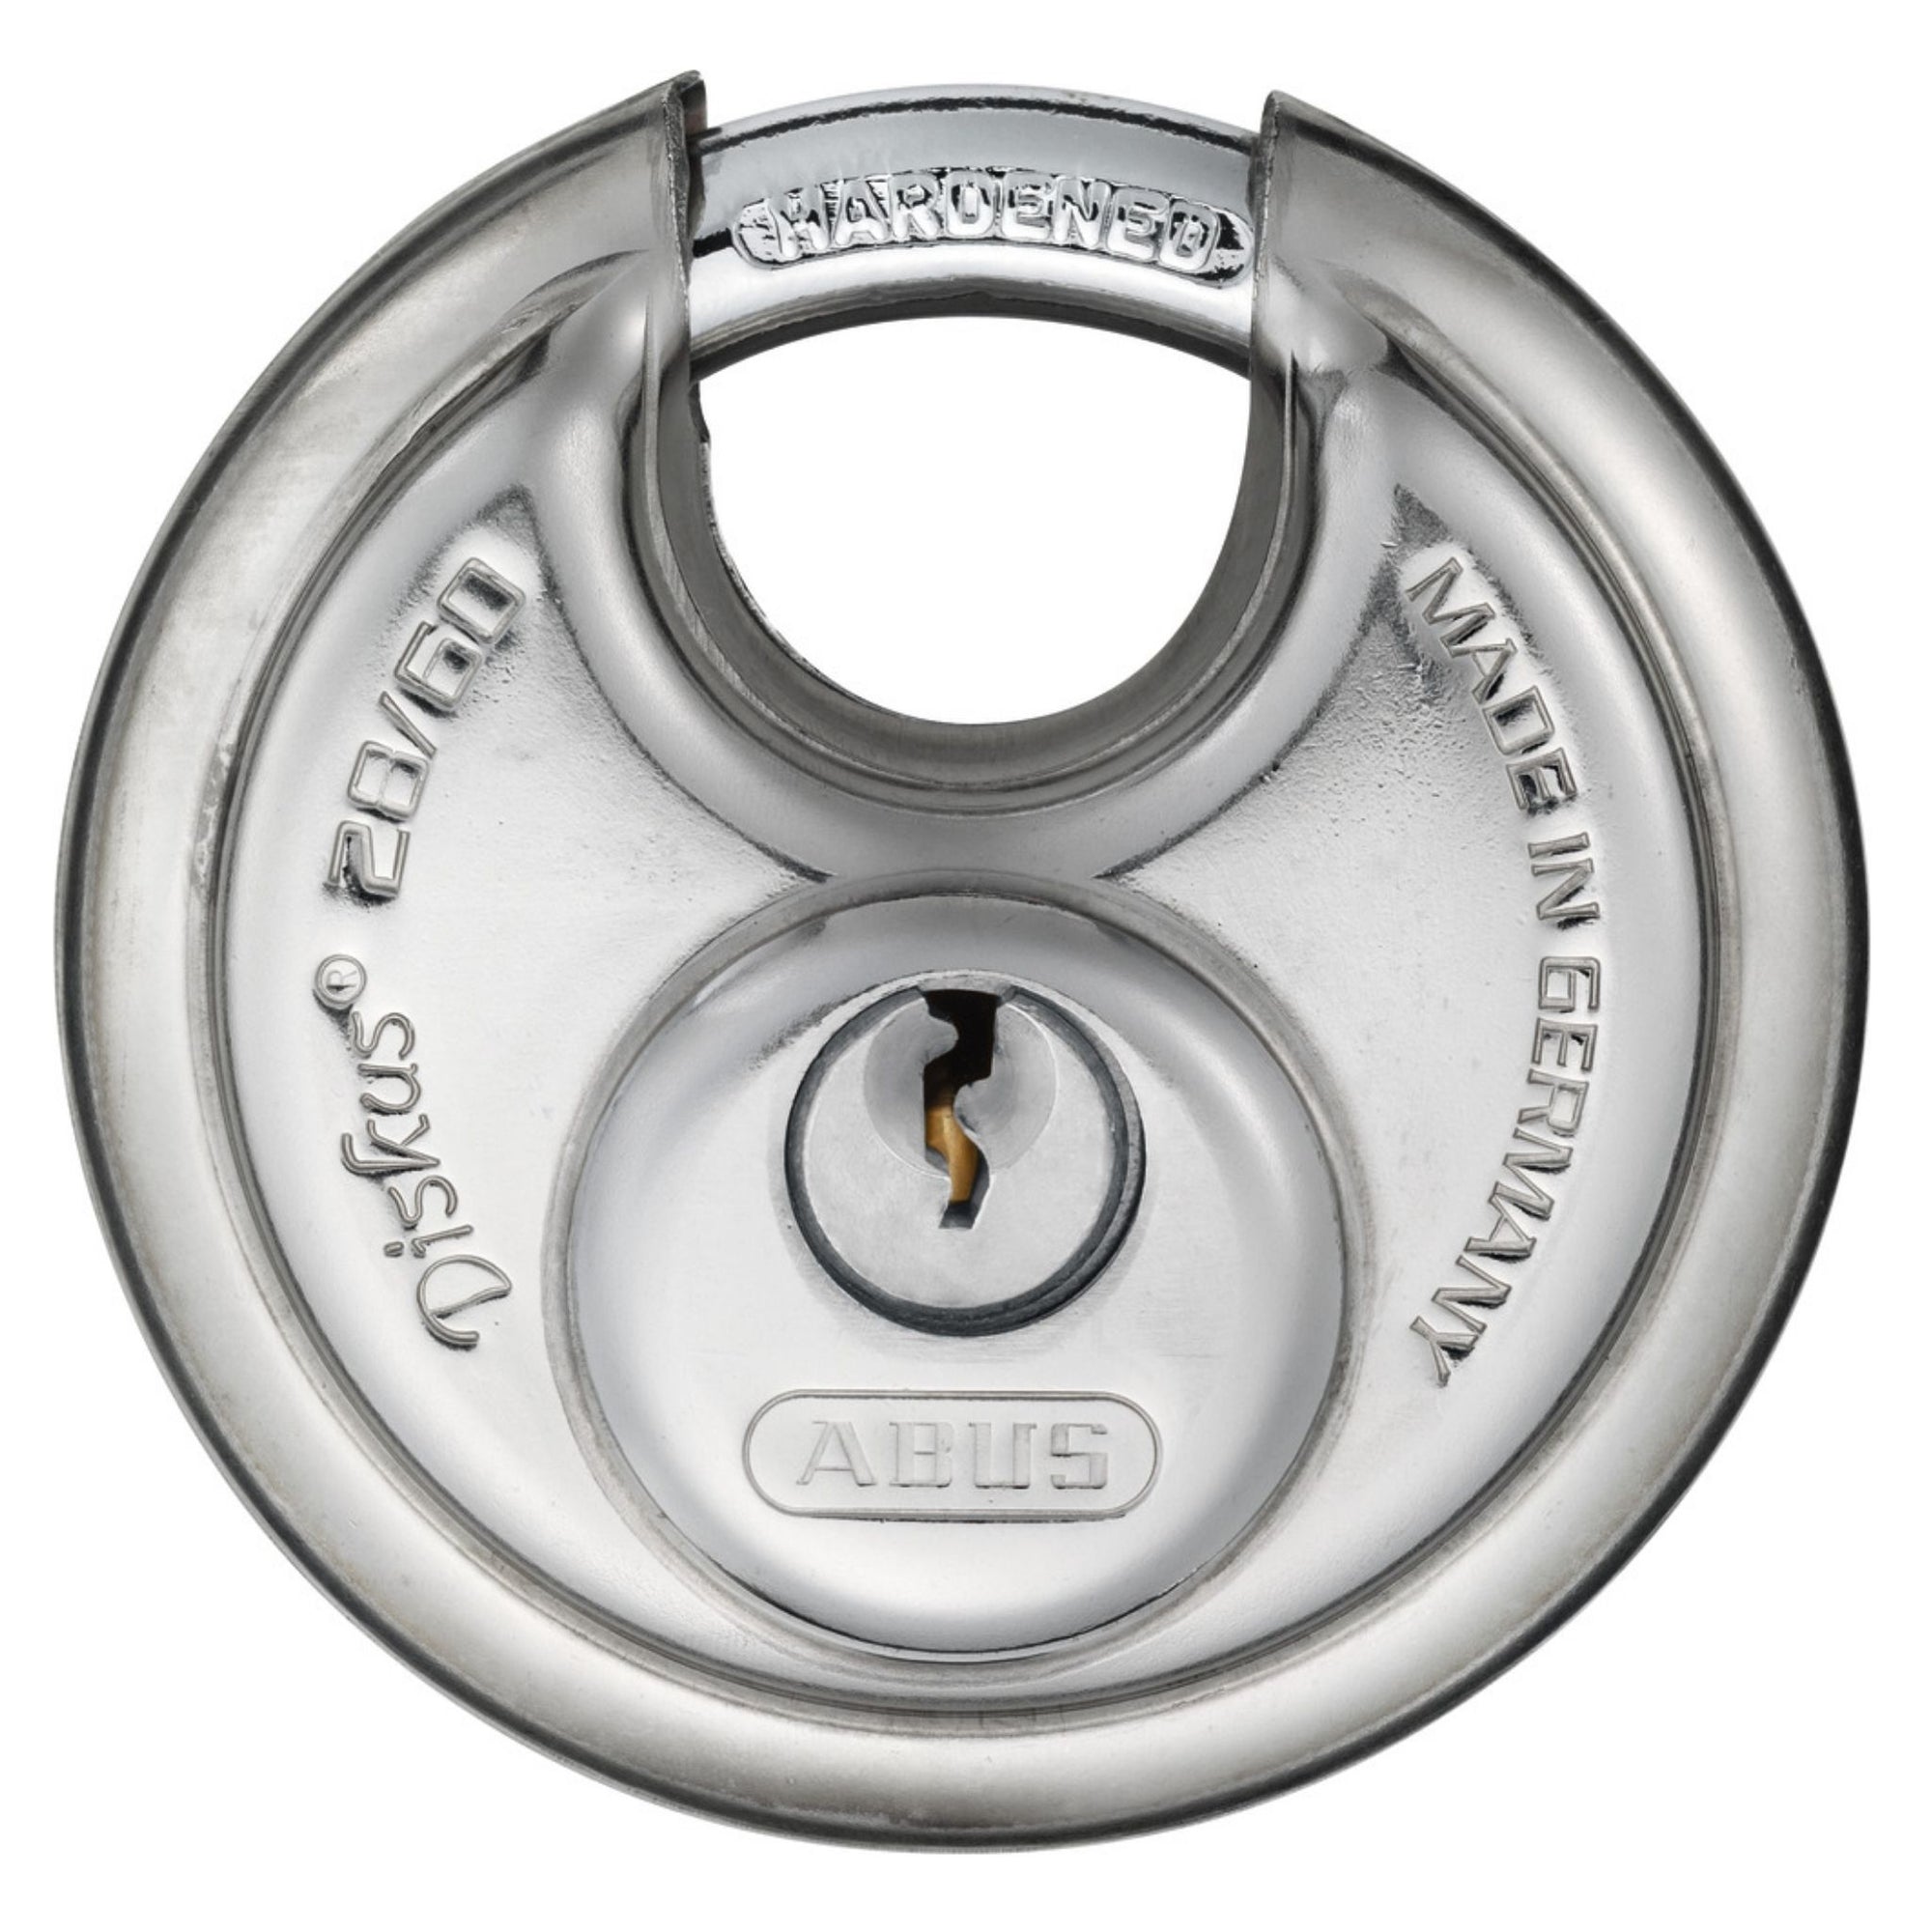 Abus 28/60 KD C Diskus Lock Hardened Steel Disk Padlocks Individually Carded for Retail Display - The Lock Source